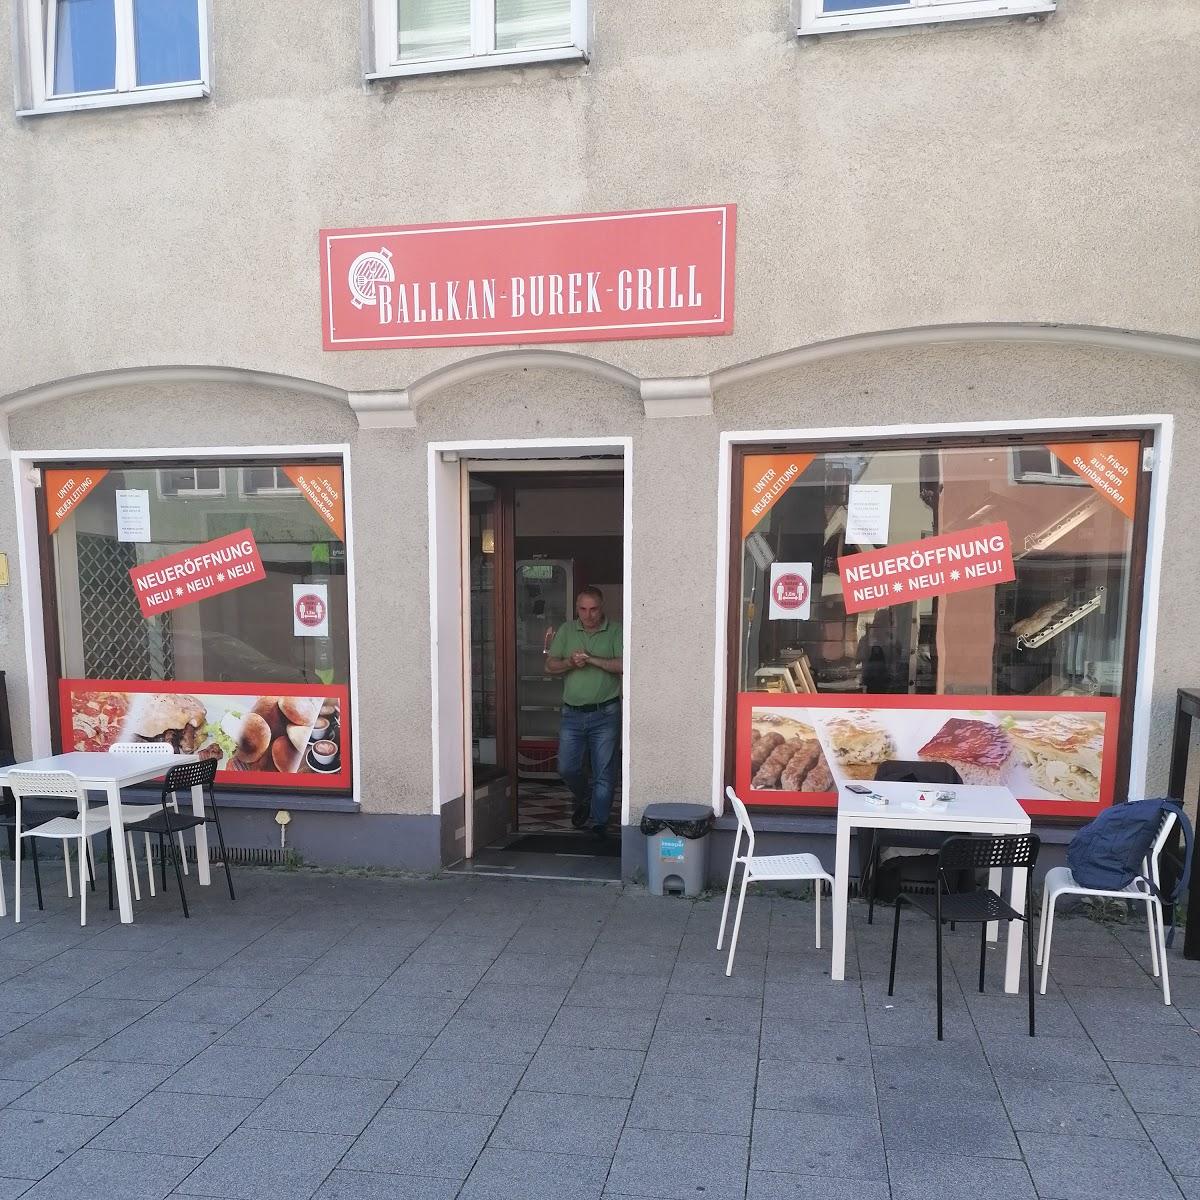 Restaurant "Ballkan Burek Grill" in Memmingen